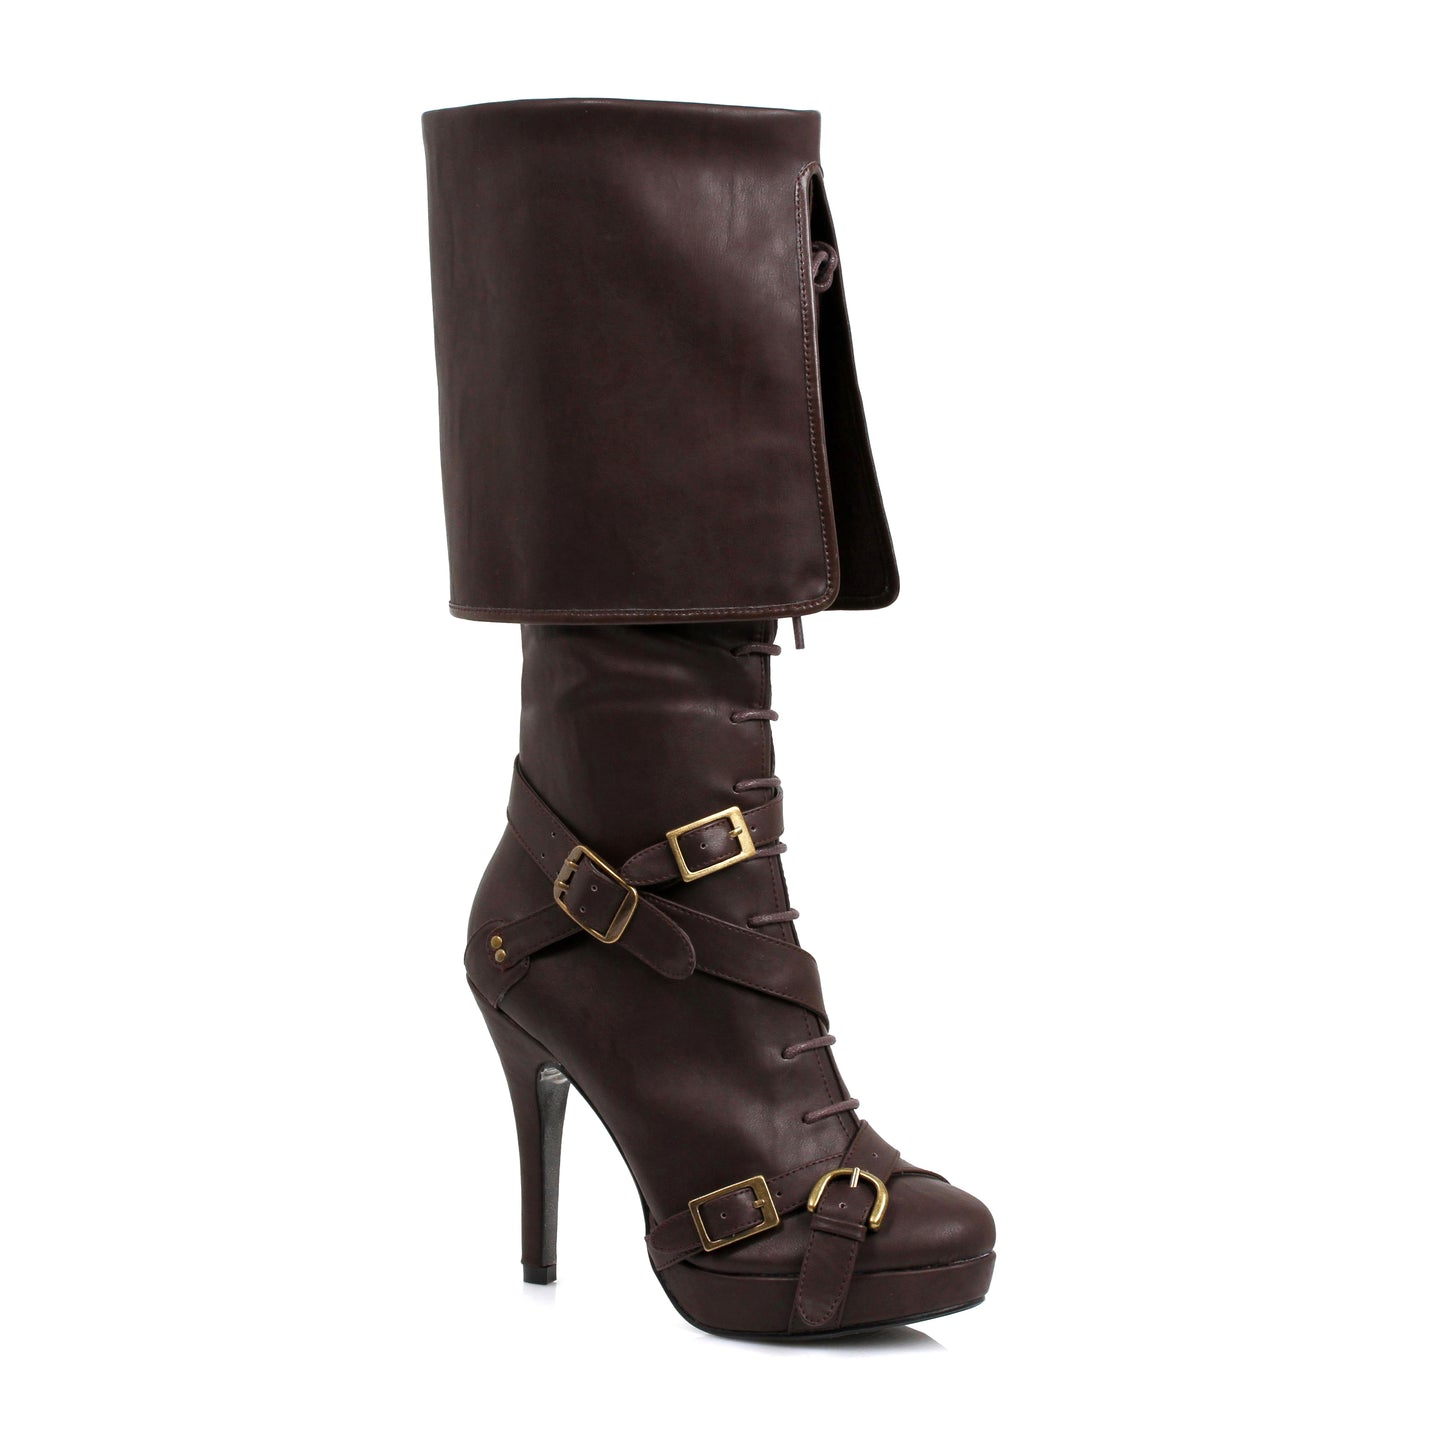 414-KEIRA Ellie Shoes 4" Knee High Boot. Women 4 INCH HEEL KNEE HIGH